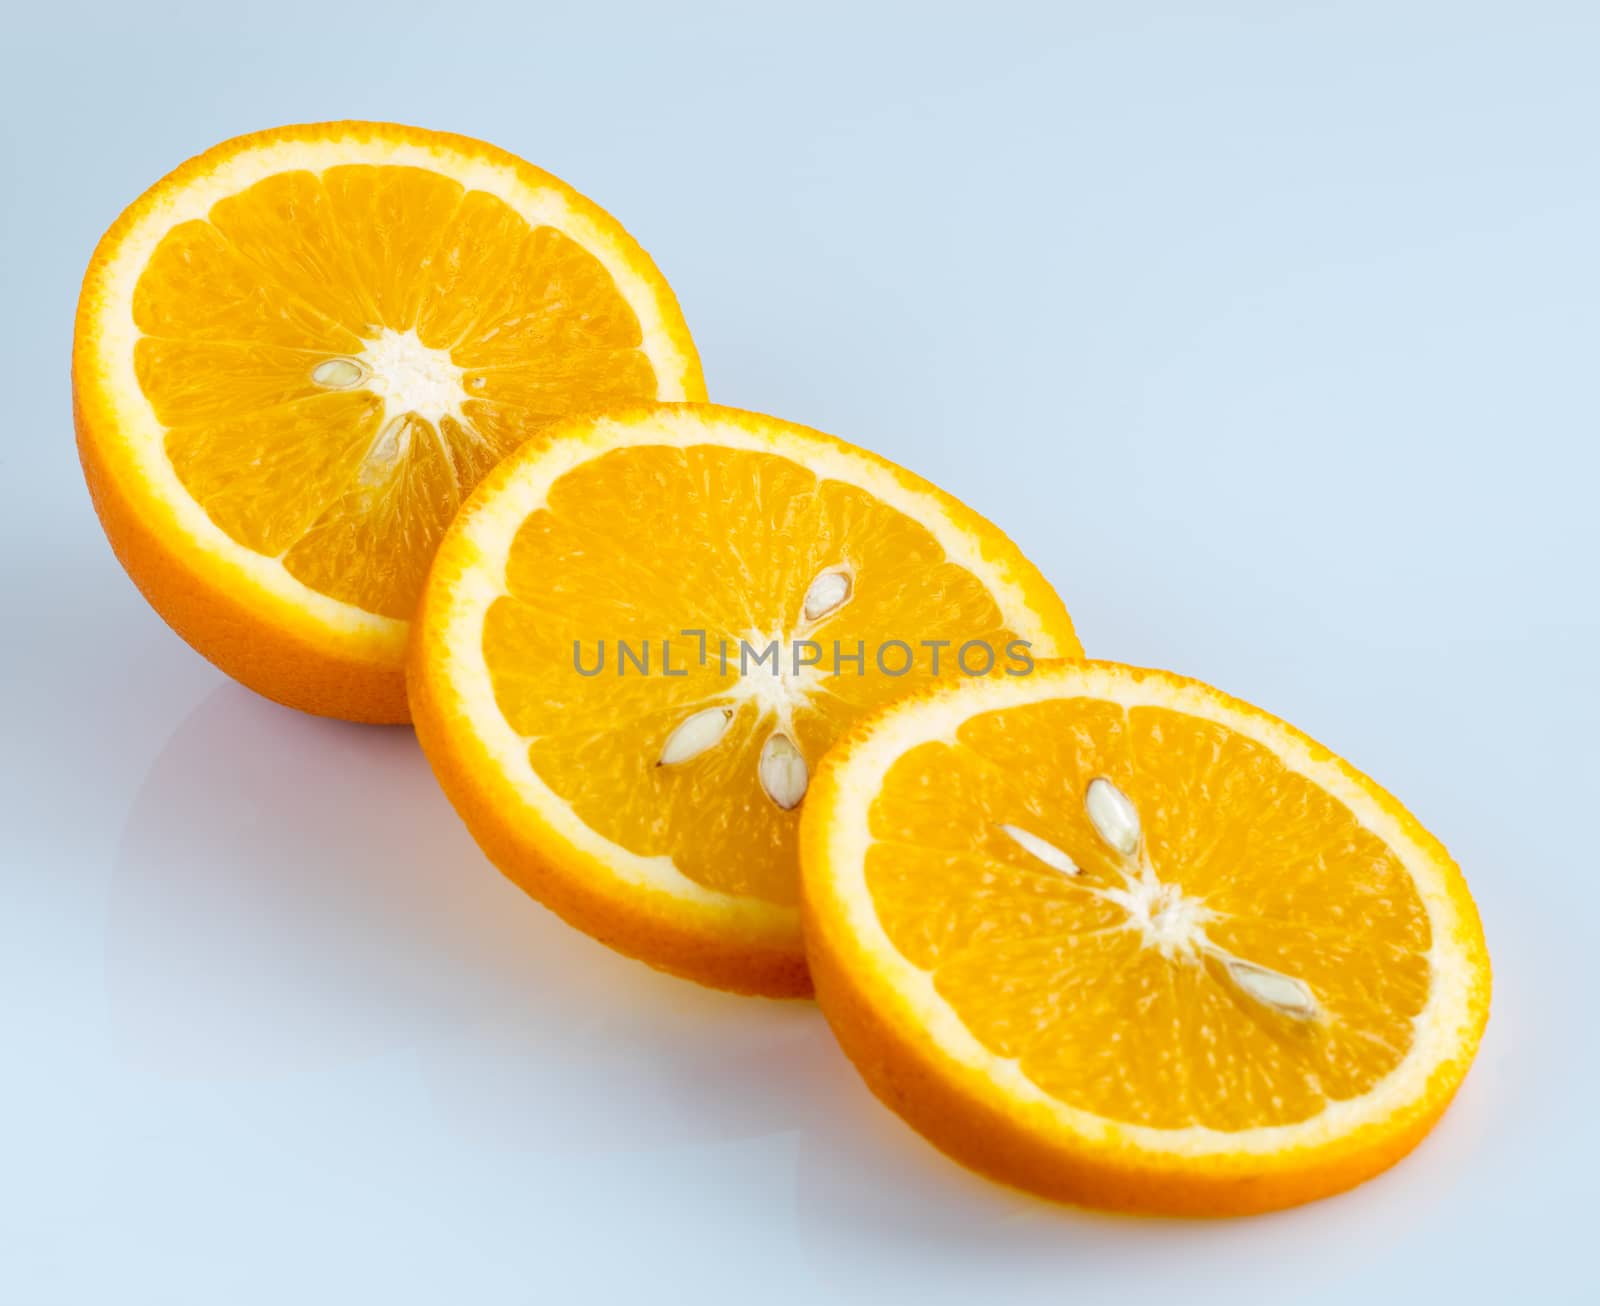 Three rings of sliced juicy ripe orange on a light blue background.